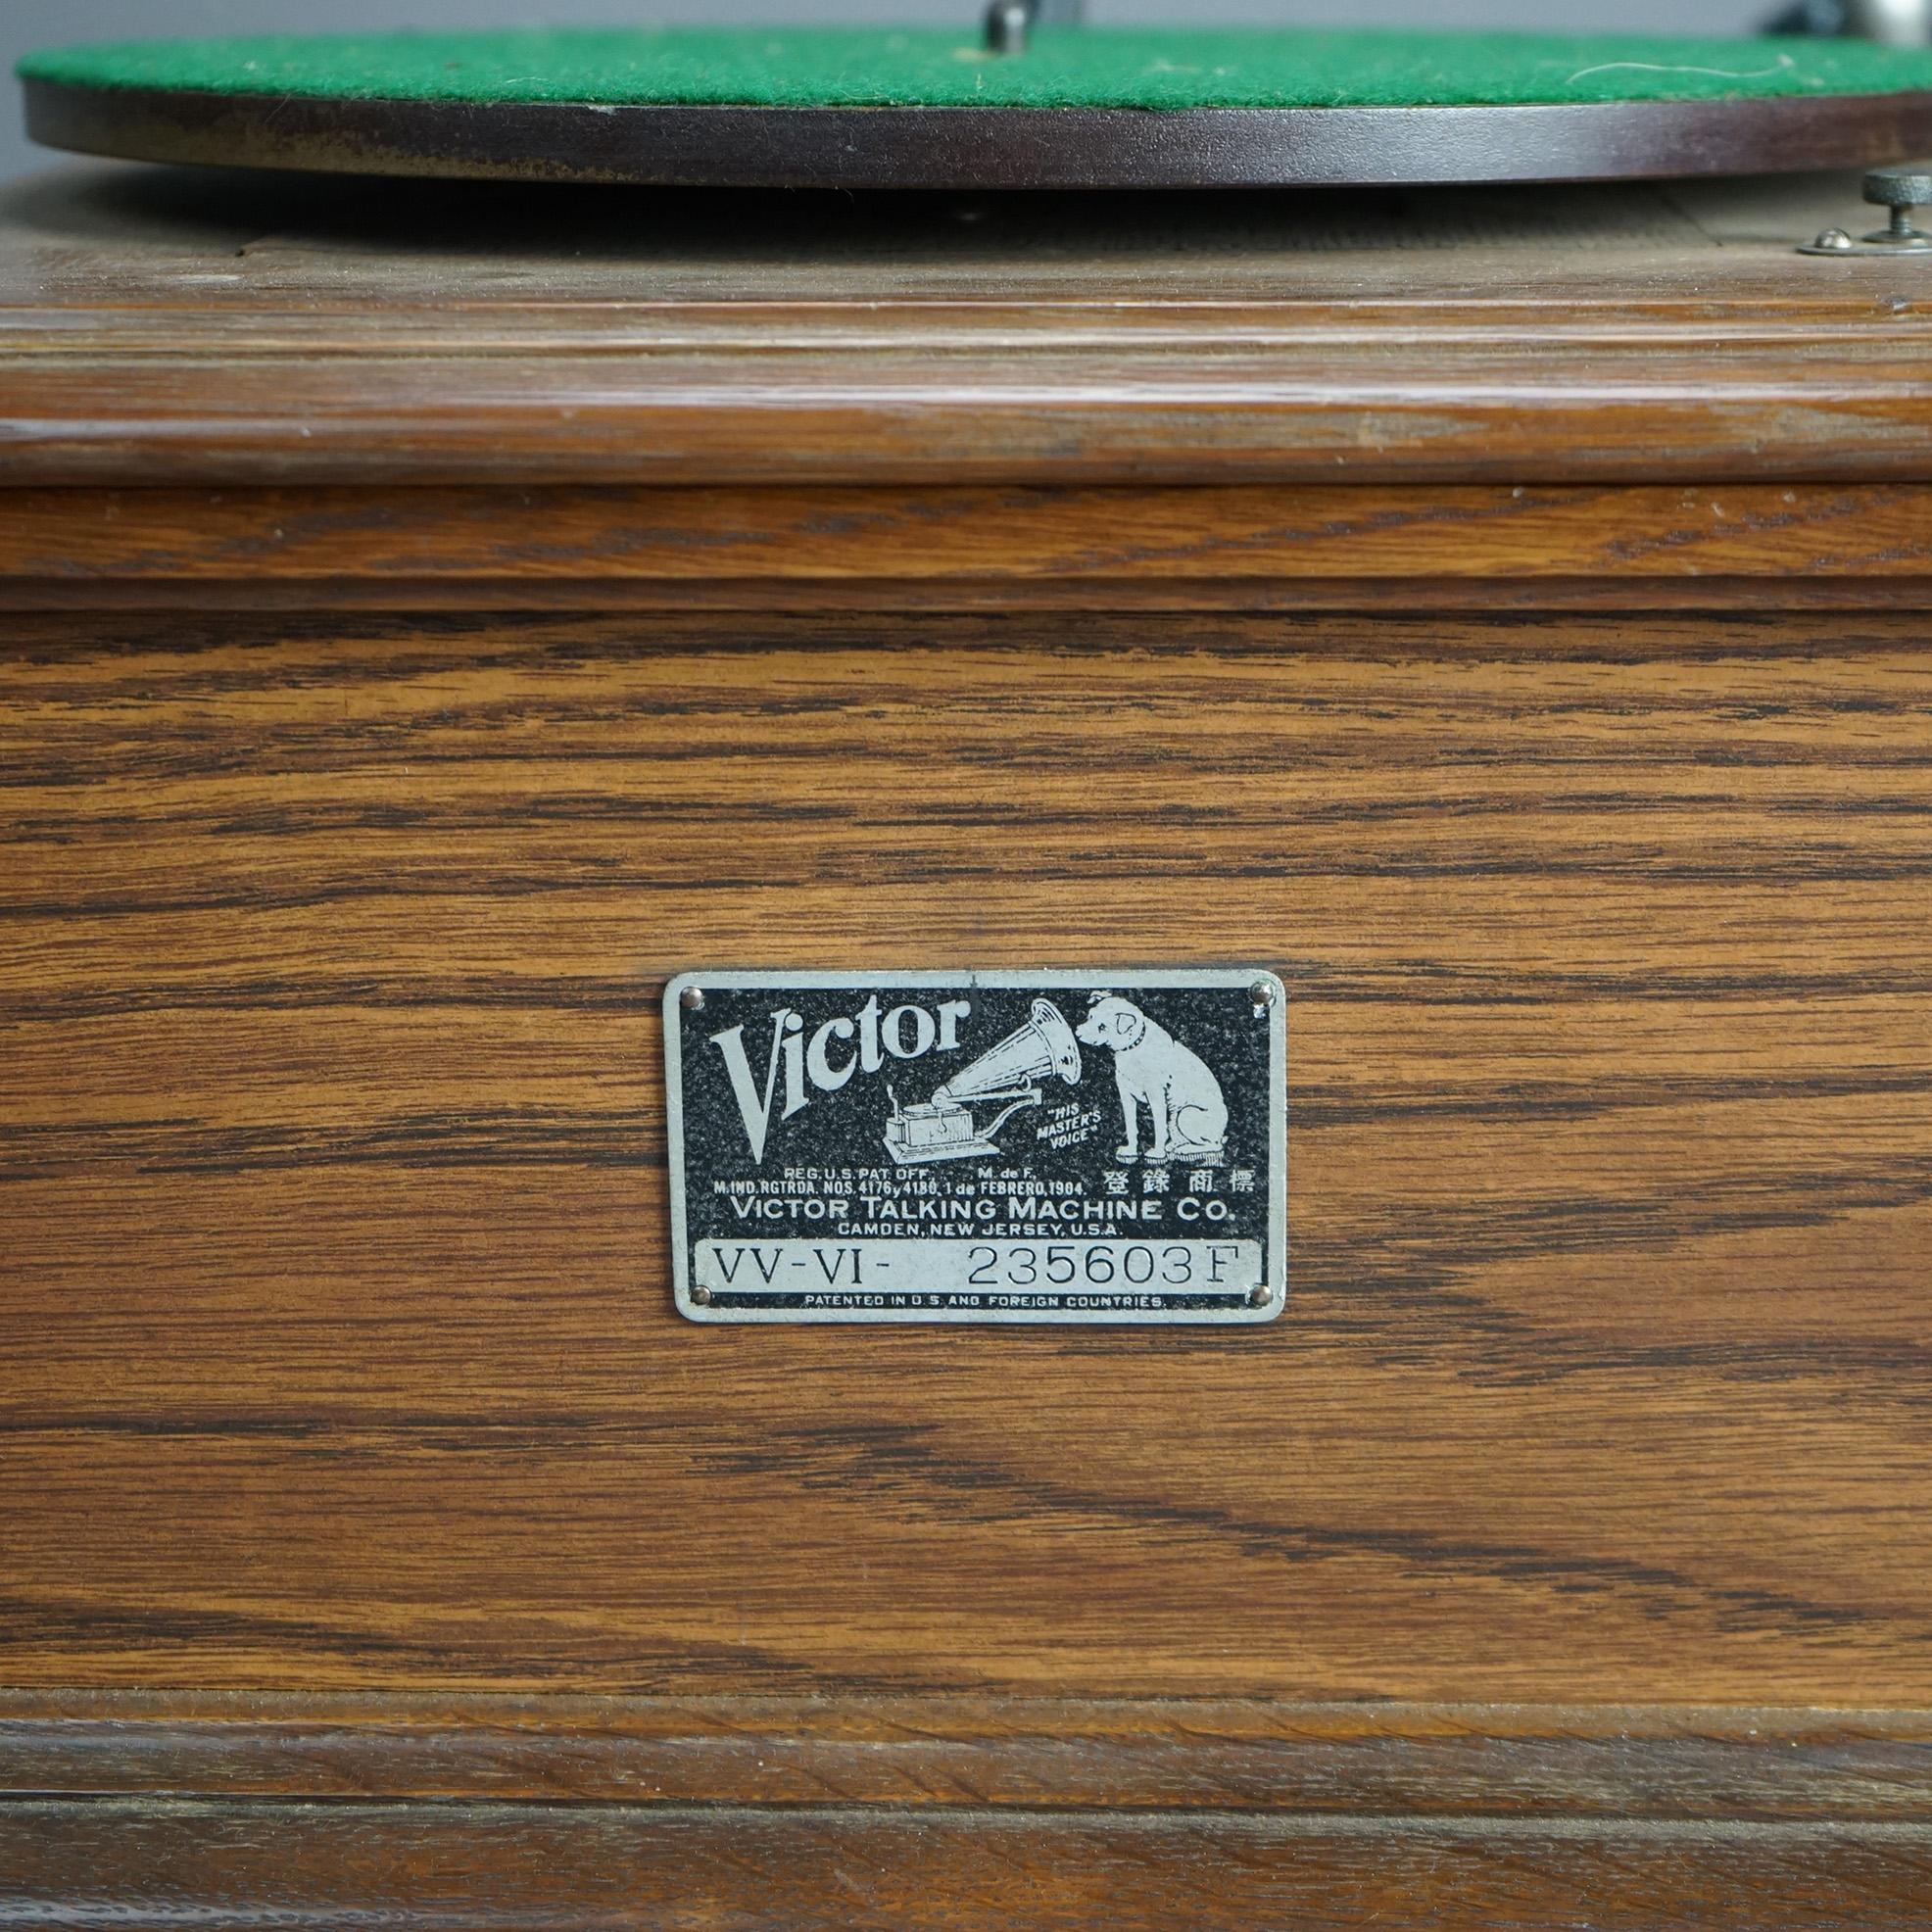 Antique Victor Oak Case Phonograph, Maker Label as Photographed,  Circa 1900

Measures - 12